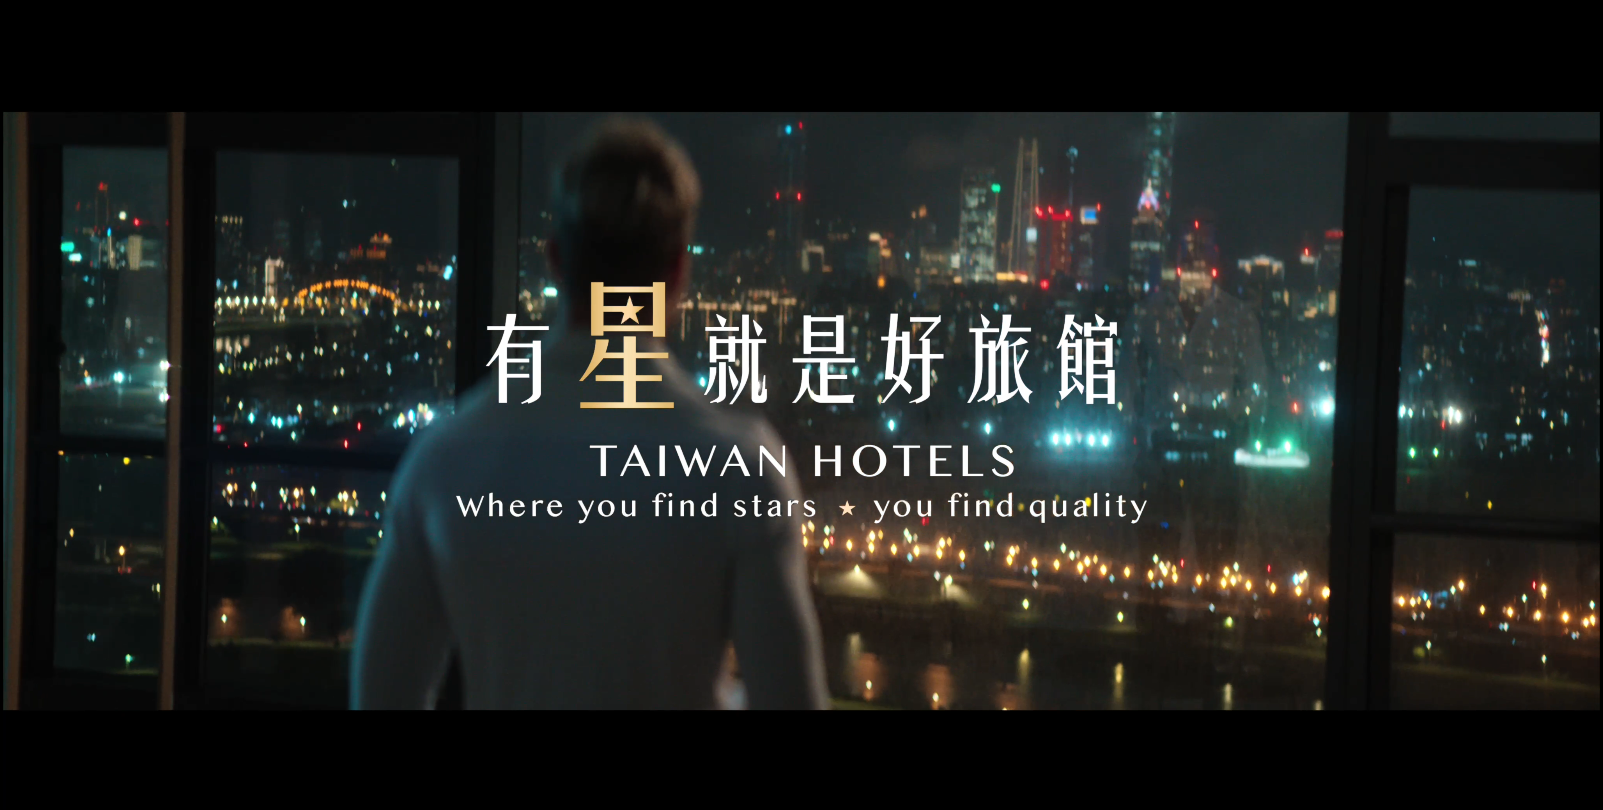  星級旅館｜有星就是好旅館 - 2023年度形象片(完整版) TAIWAN HOTELS - Where you find stars, you find quality (Full Ver.)